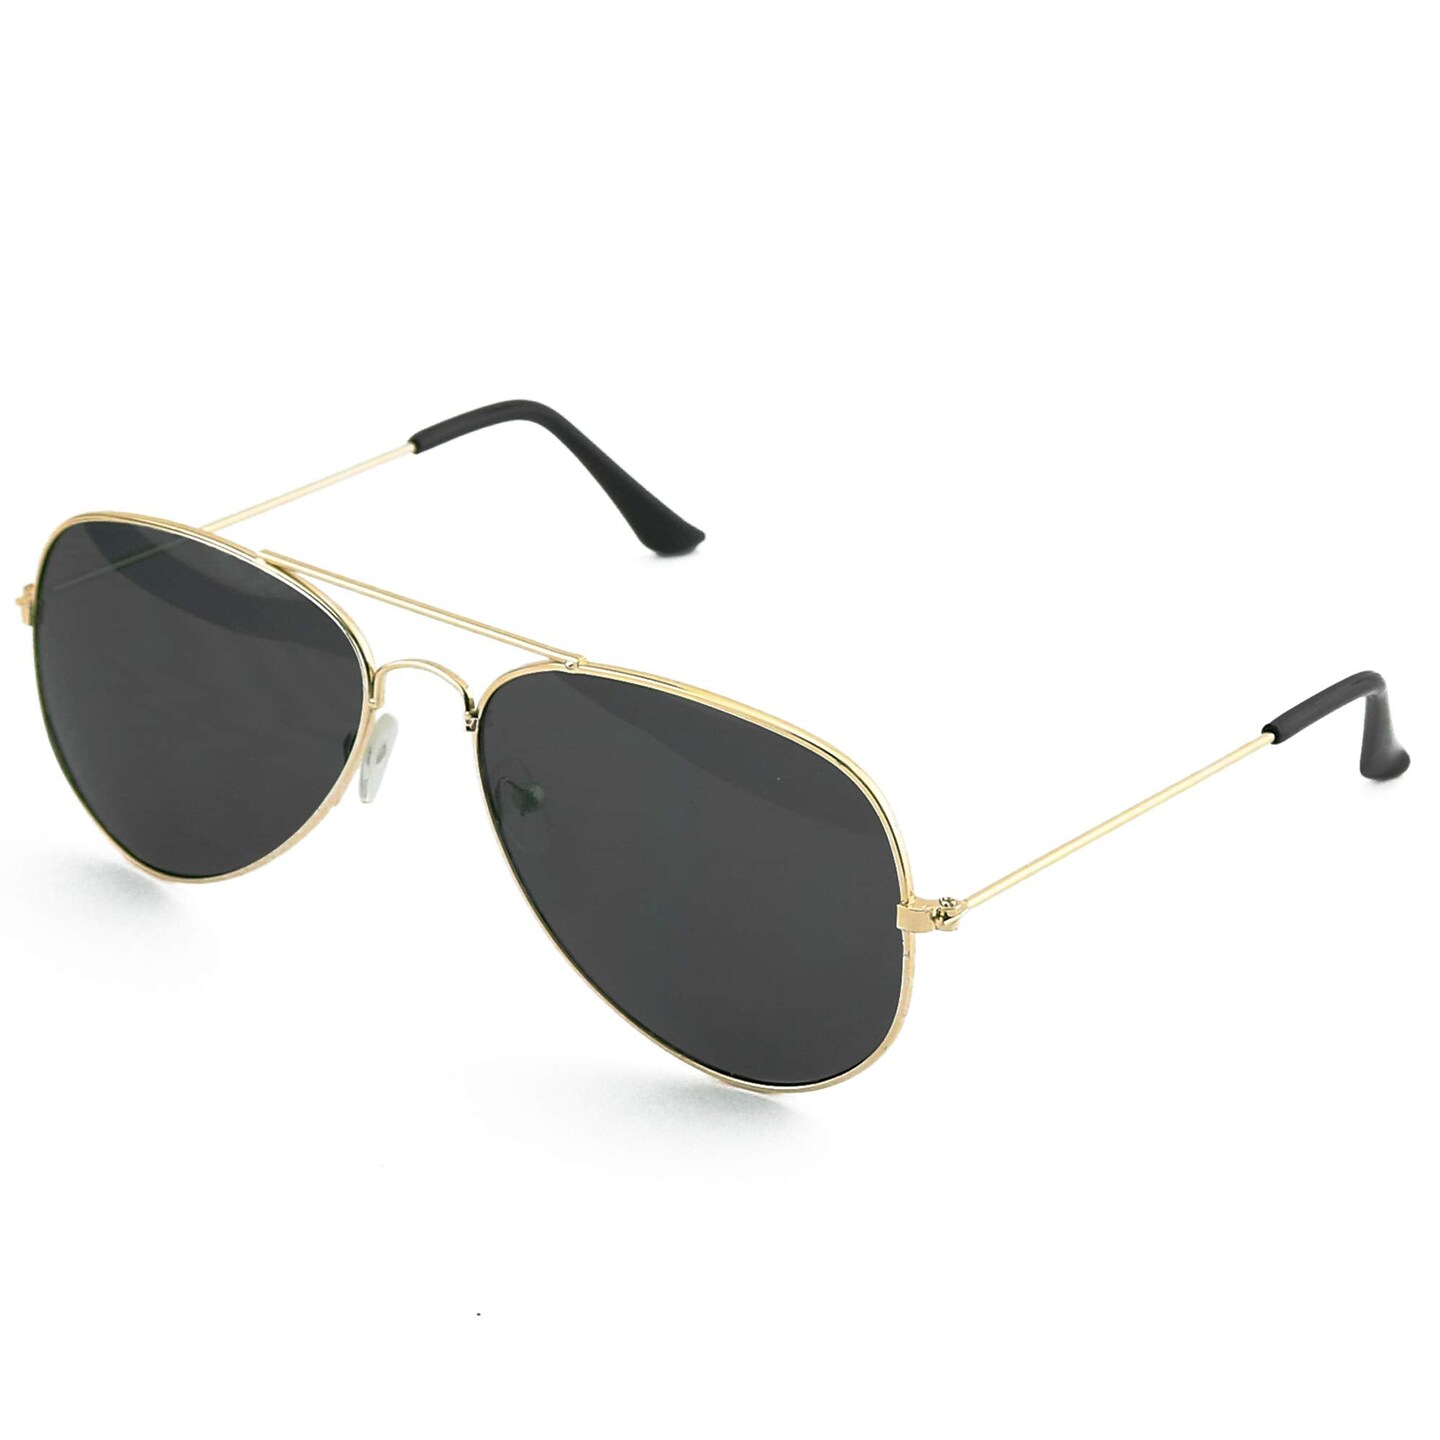 Black Gold Aviator Sunglasses - Military Style Dark Sun Glasses with ...